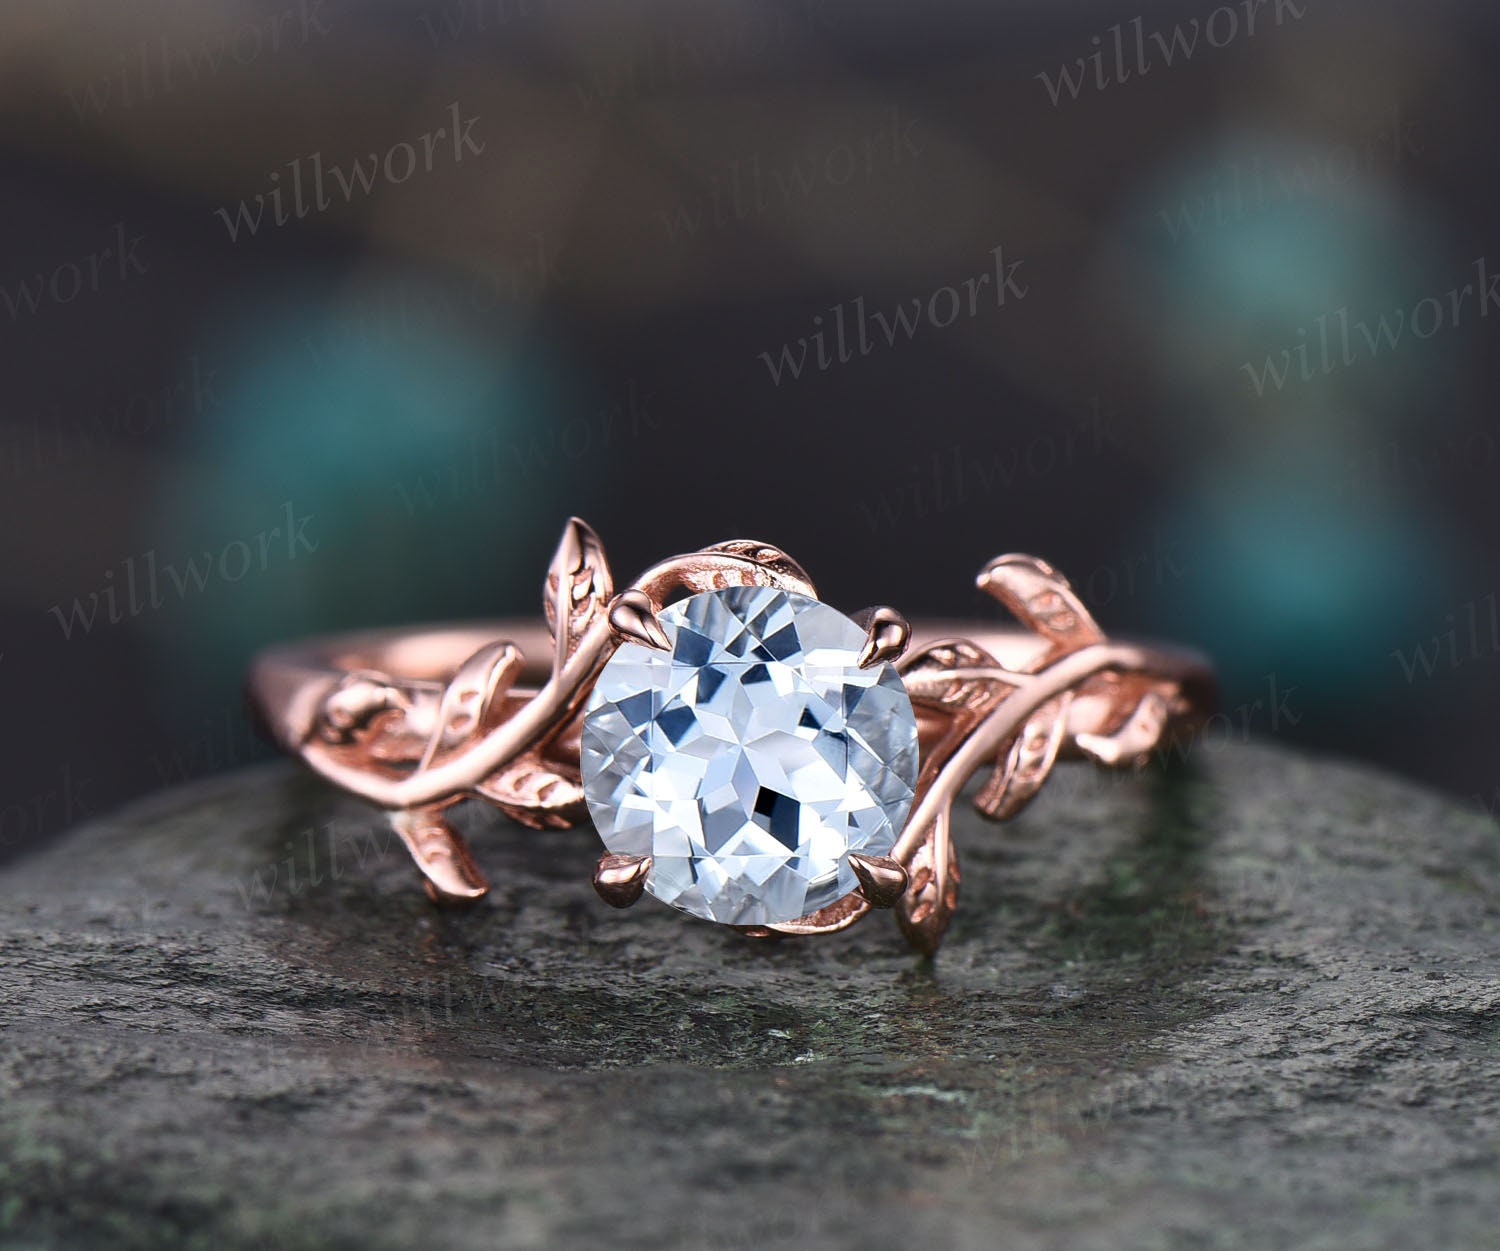 7.5 carat aquamarine .5 carats diamond on either side : r/jewelry